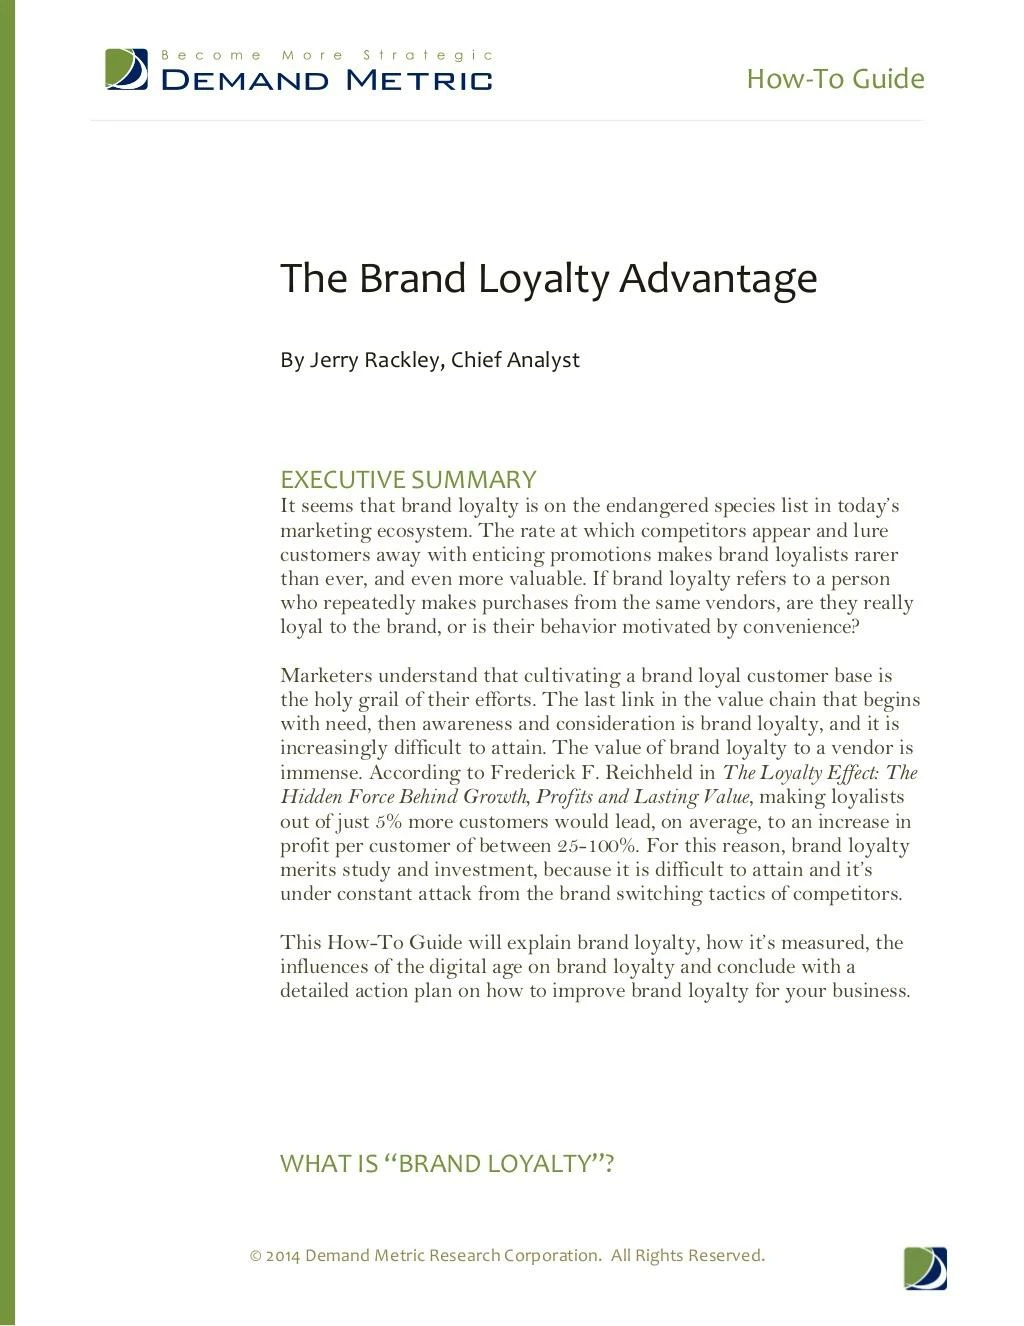 the brand loyalty advantage